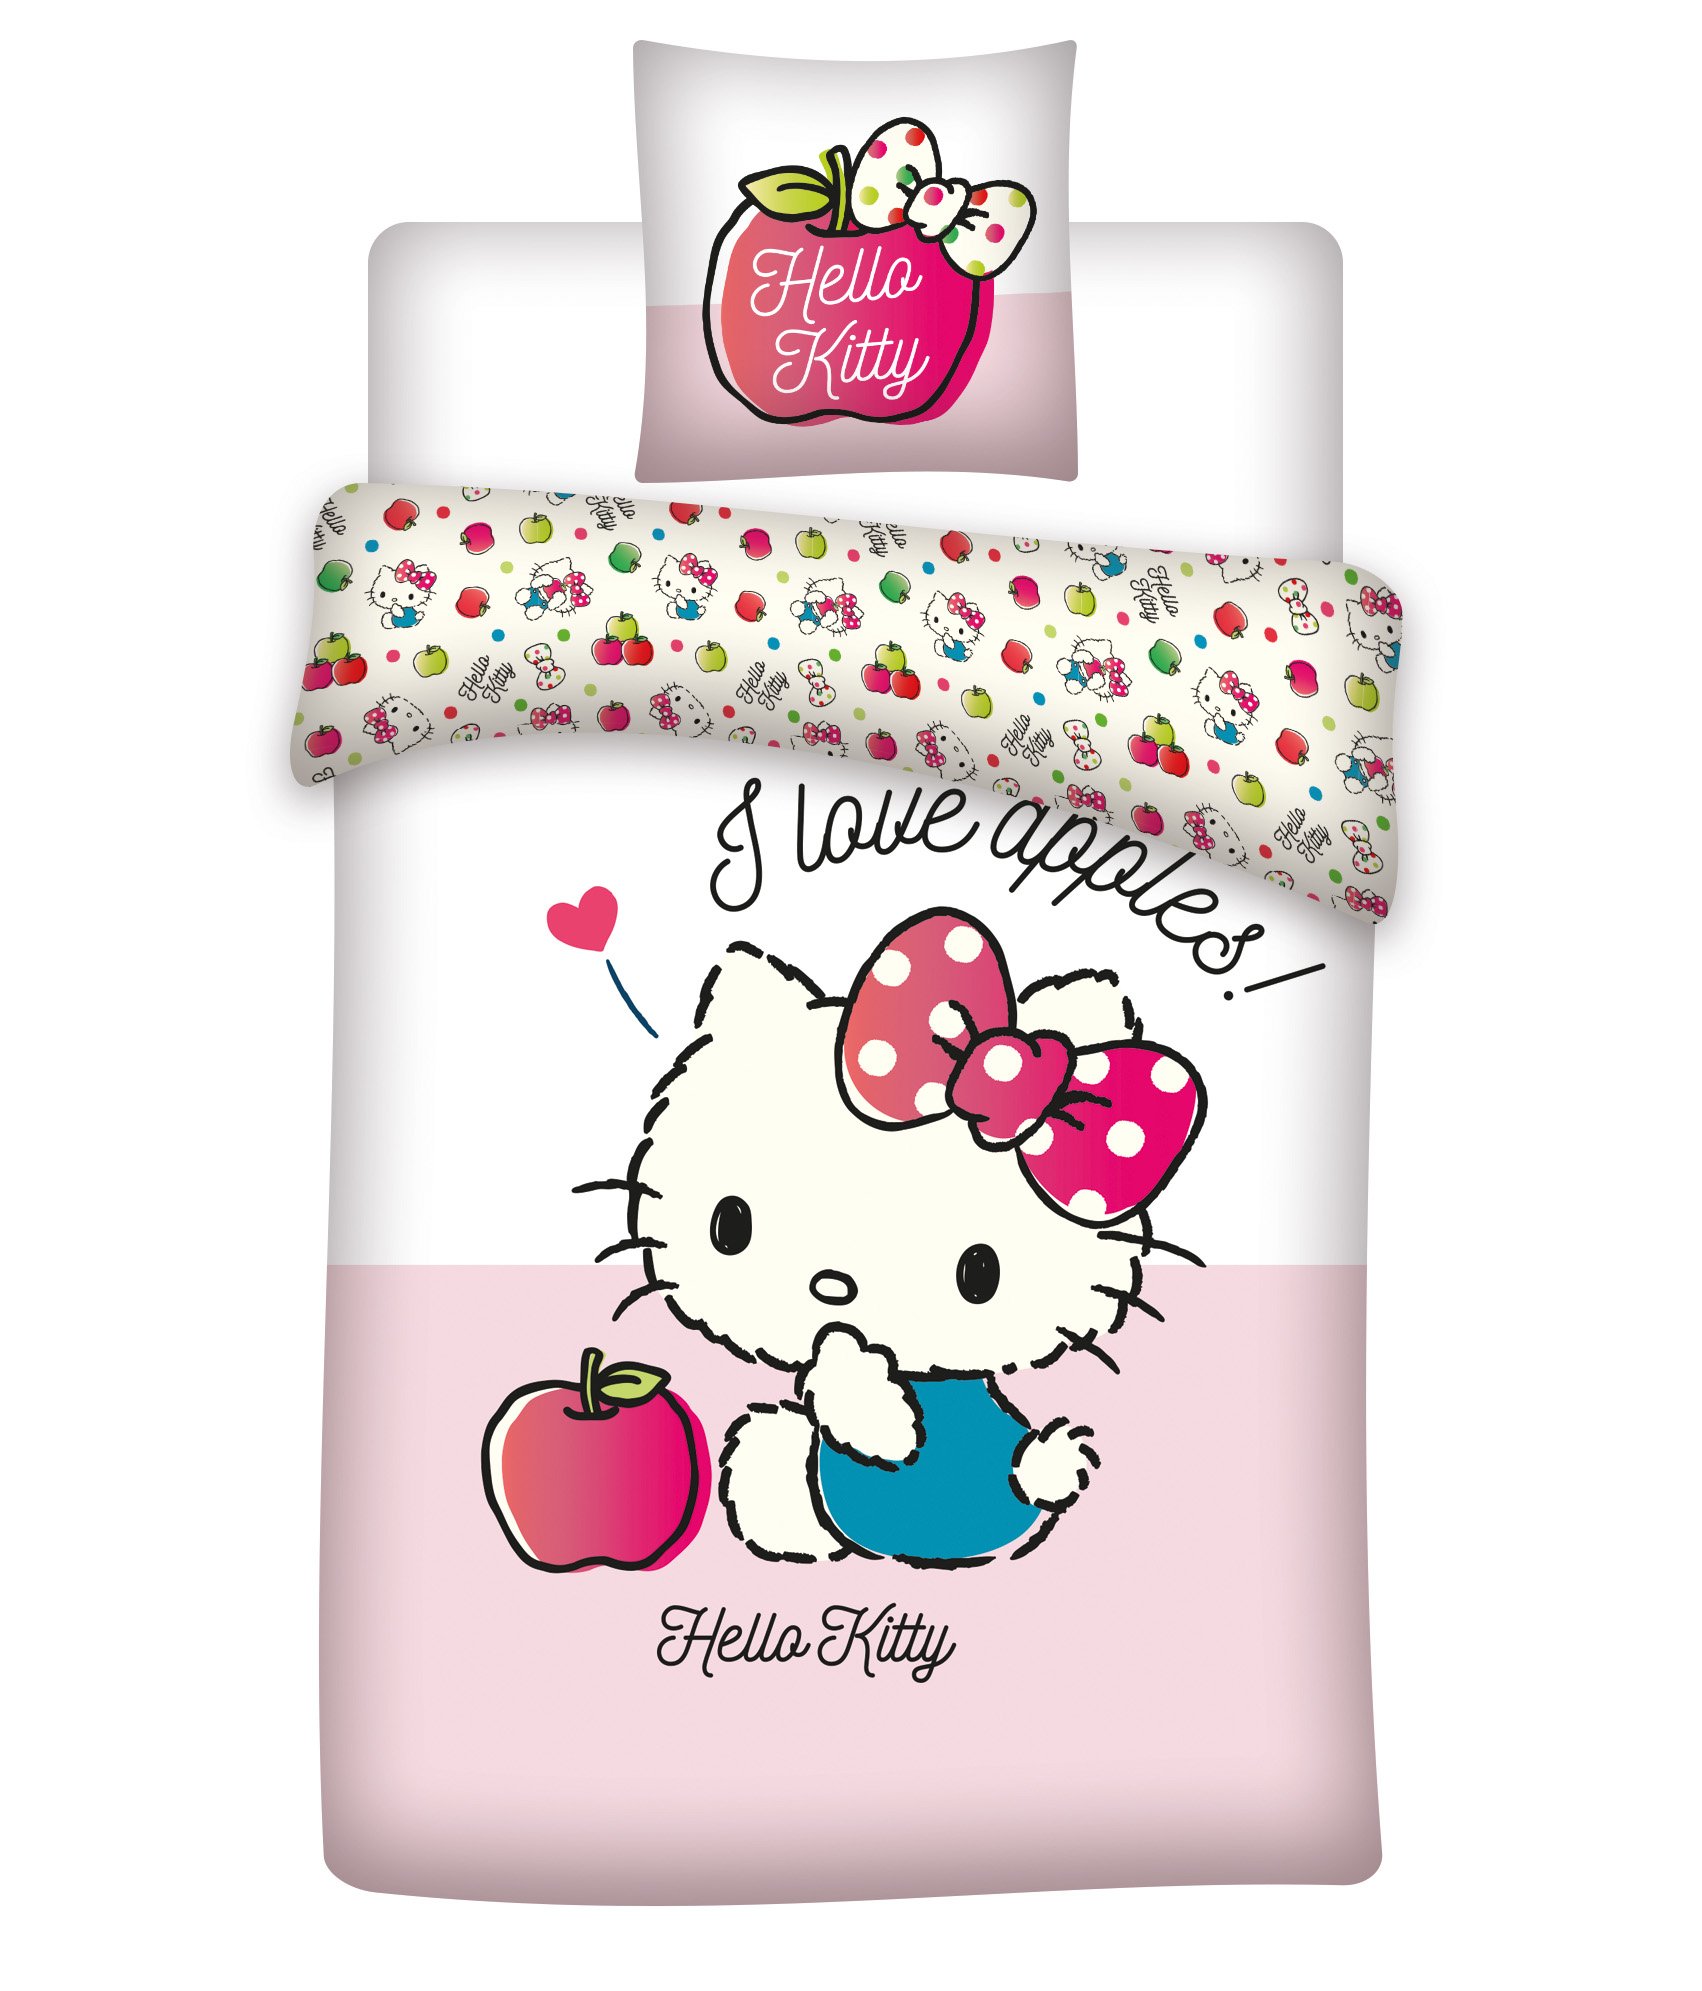 Bed Linen - Junior Size 100 x 140 cm - Hello Kitty (1000407)